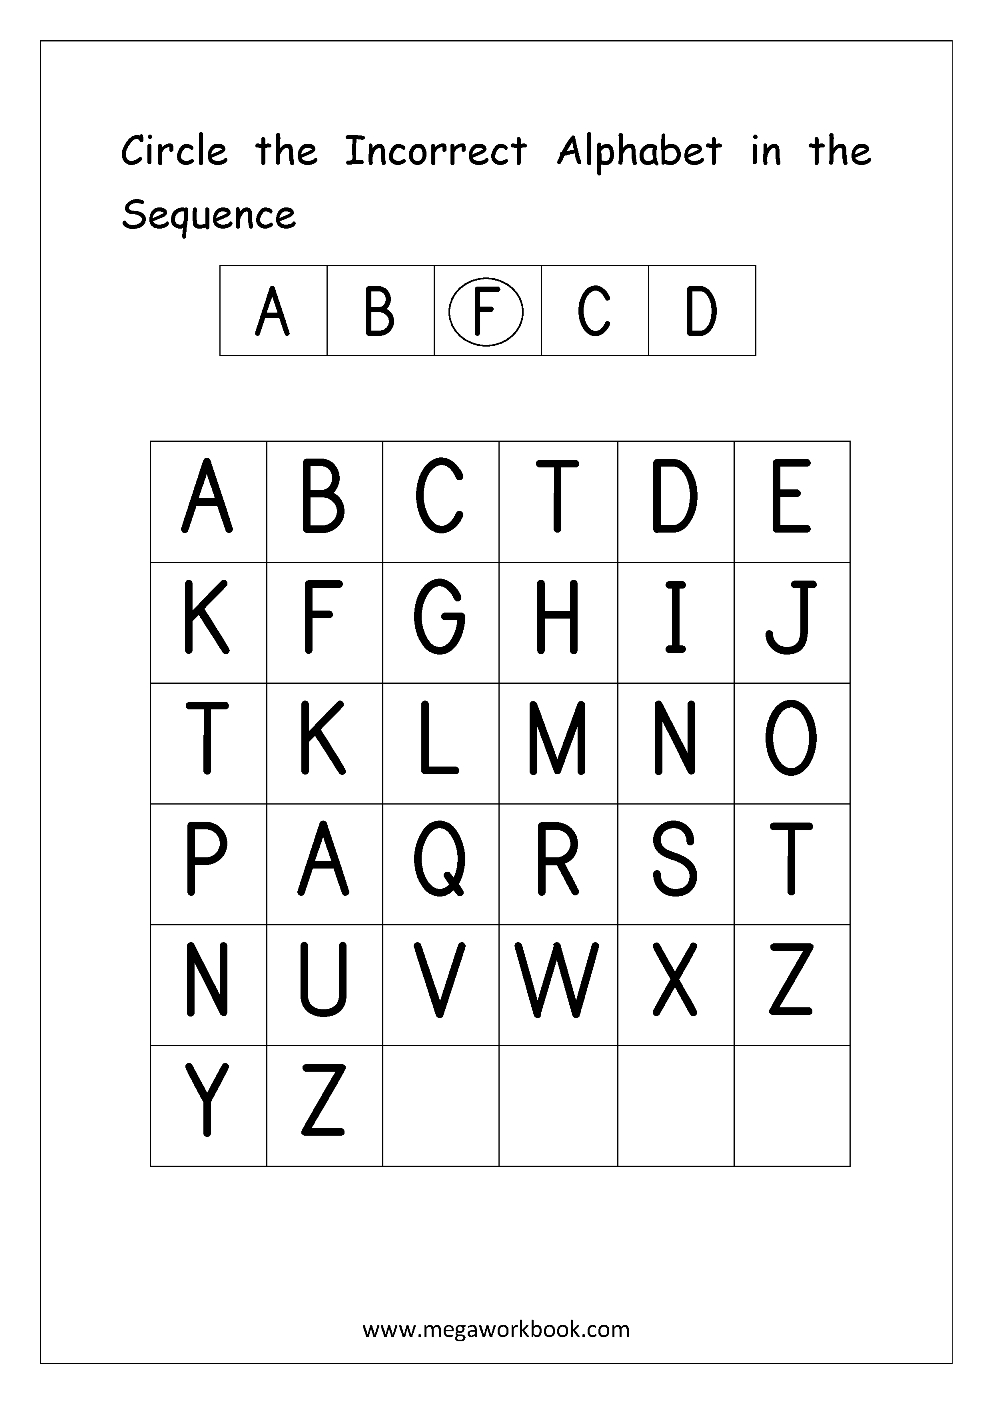 Alphabet Ordering Worksheet - Capital Letters - Circle for Alphabet Order Worksheets Free